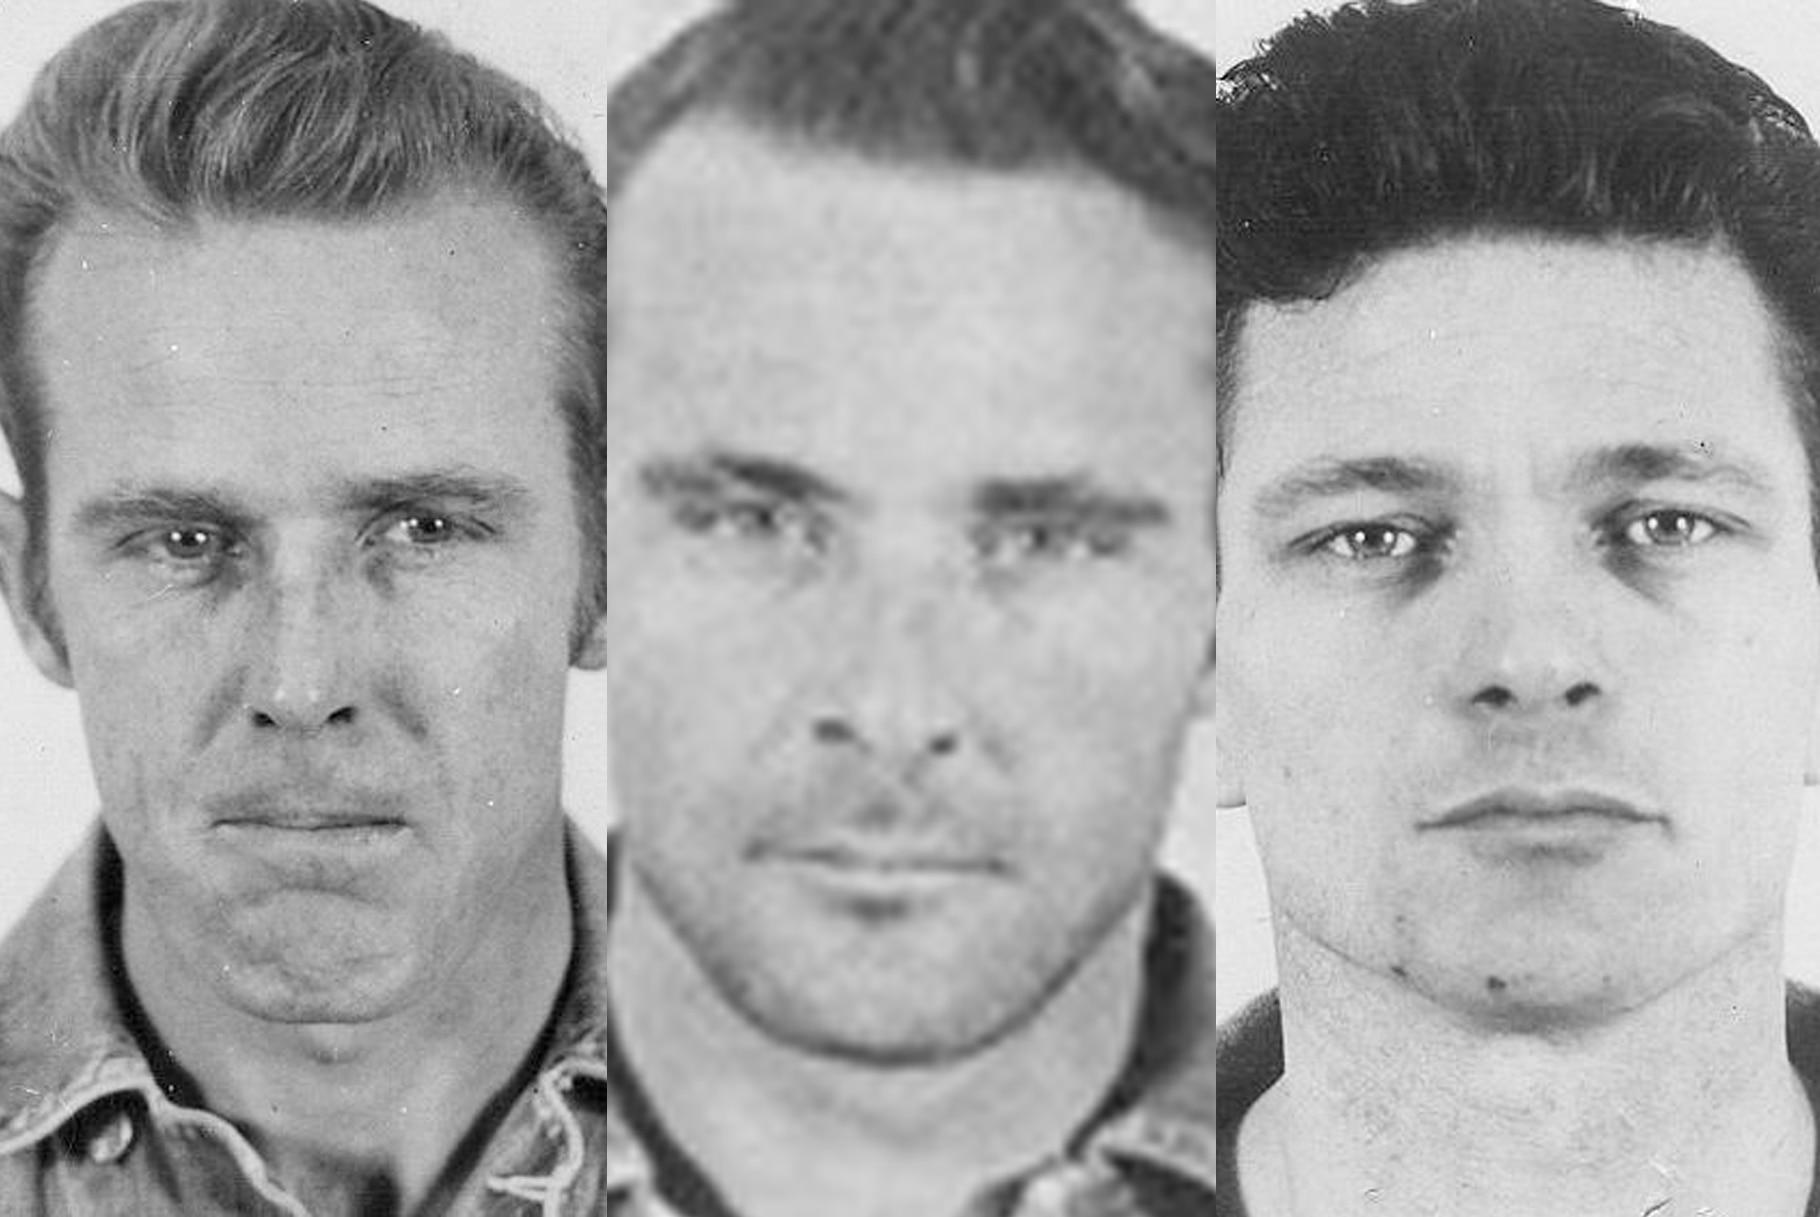 Alcatraz Escapees John Anglin, Clarence Anglin and Frank Morris